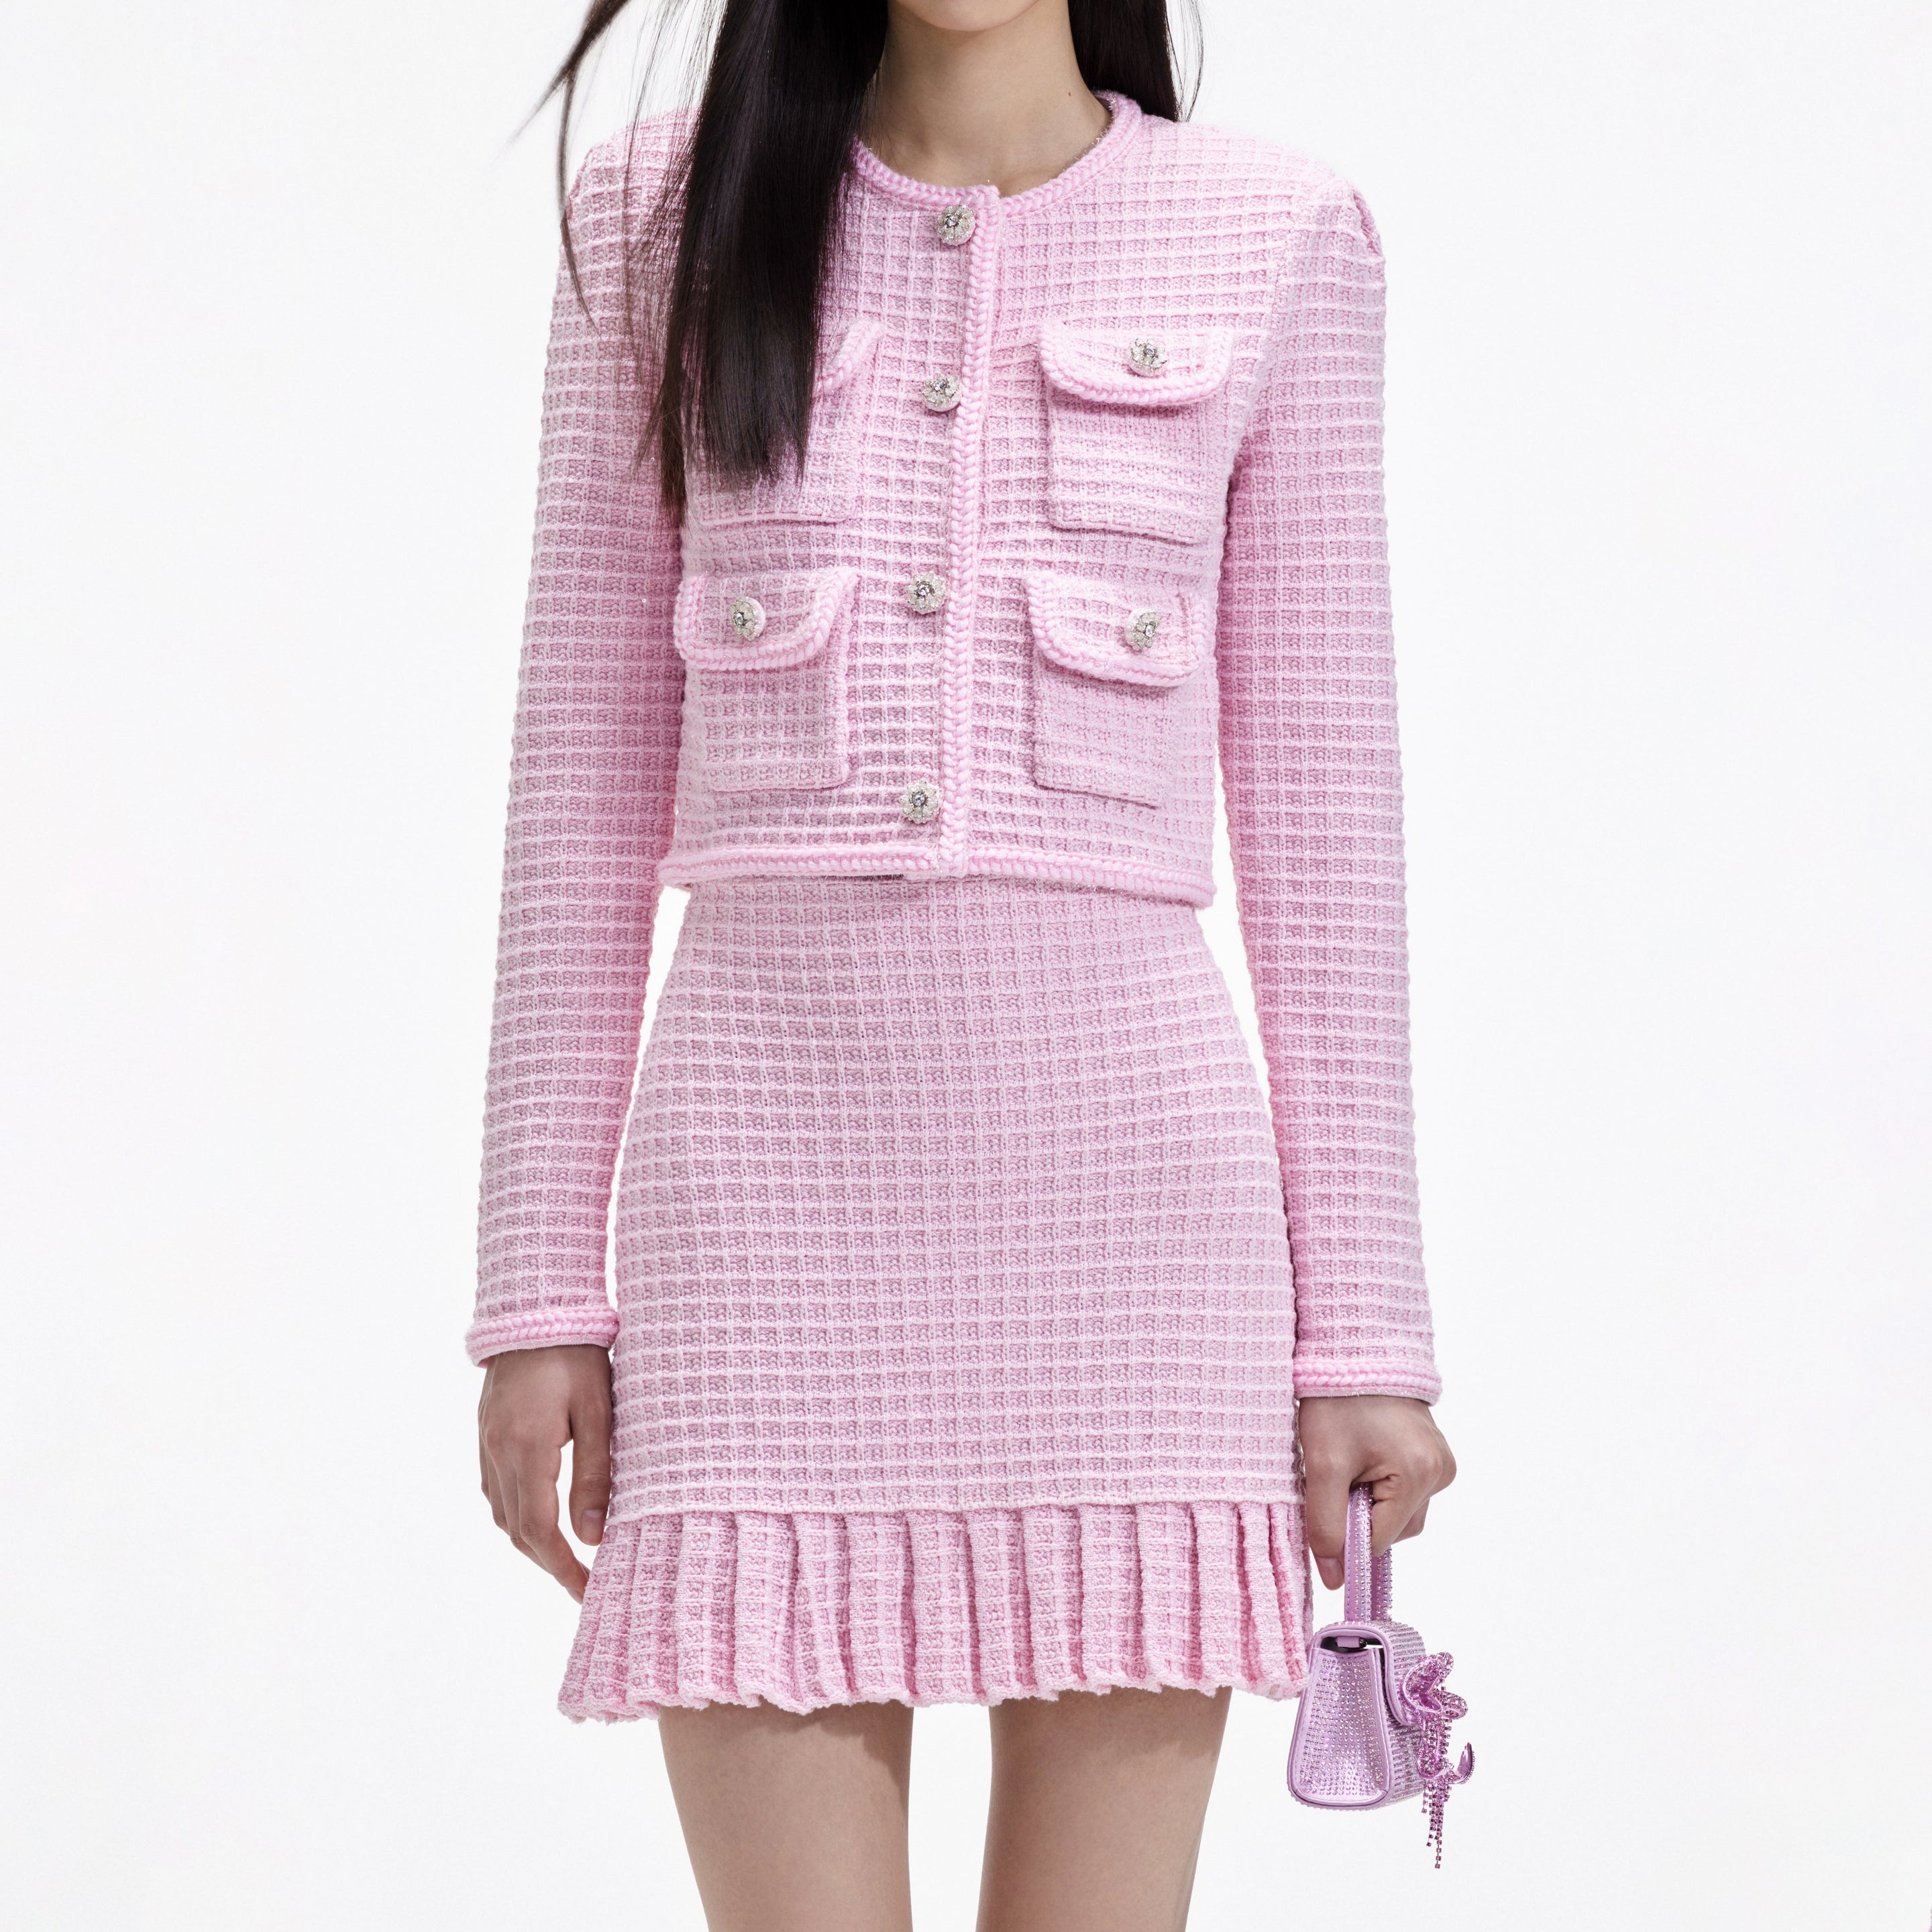 Pink Sequin Textured Knit Jacket - 4